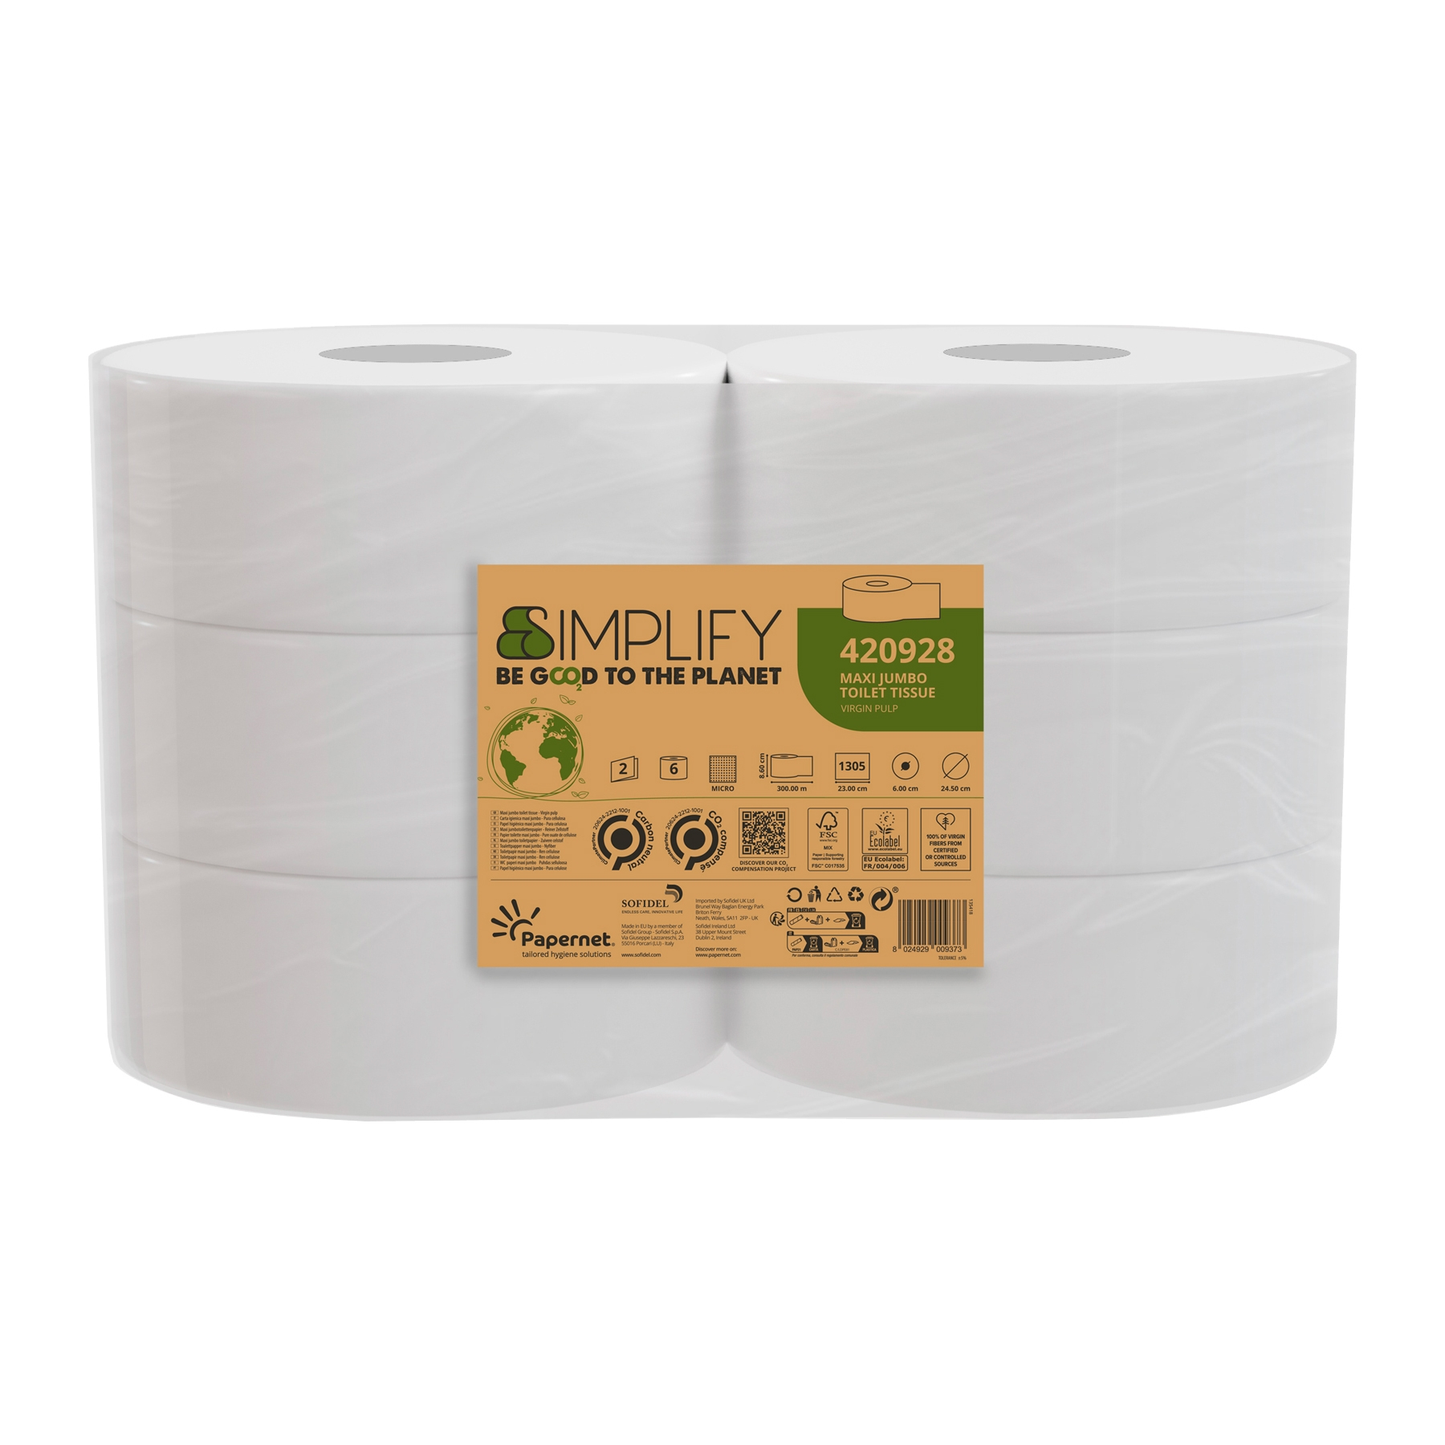 PAPERNET CO² Simplify Toiletpapir Maxi Jumbo 2-lags hvid, 6x300 mtr